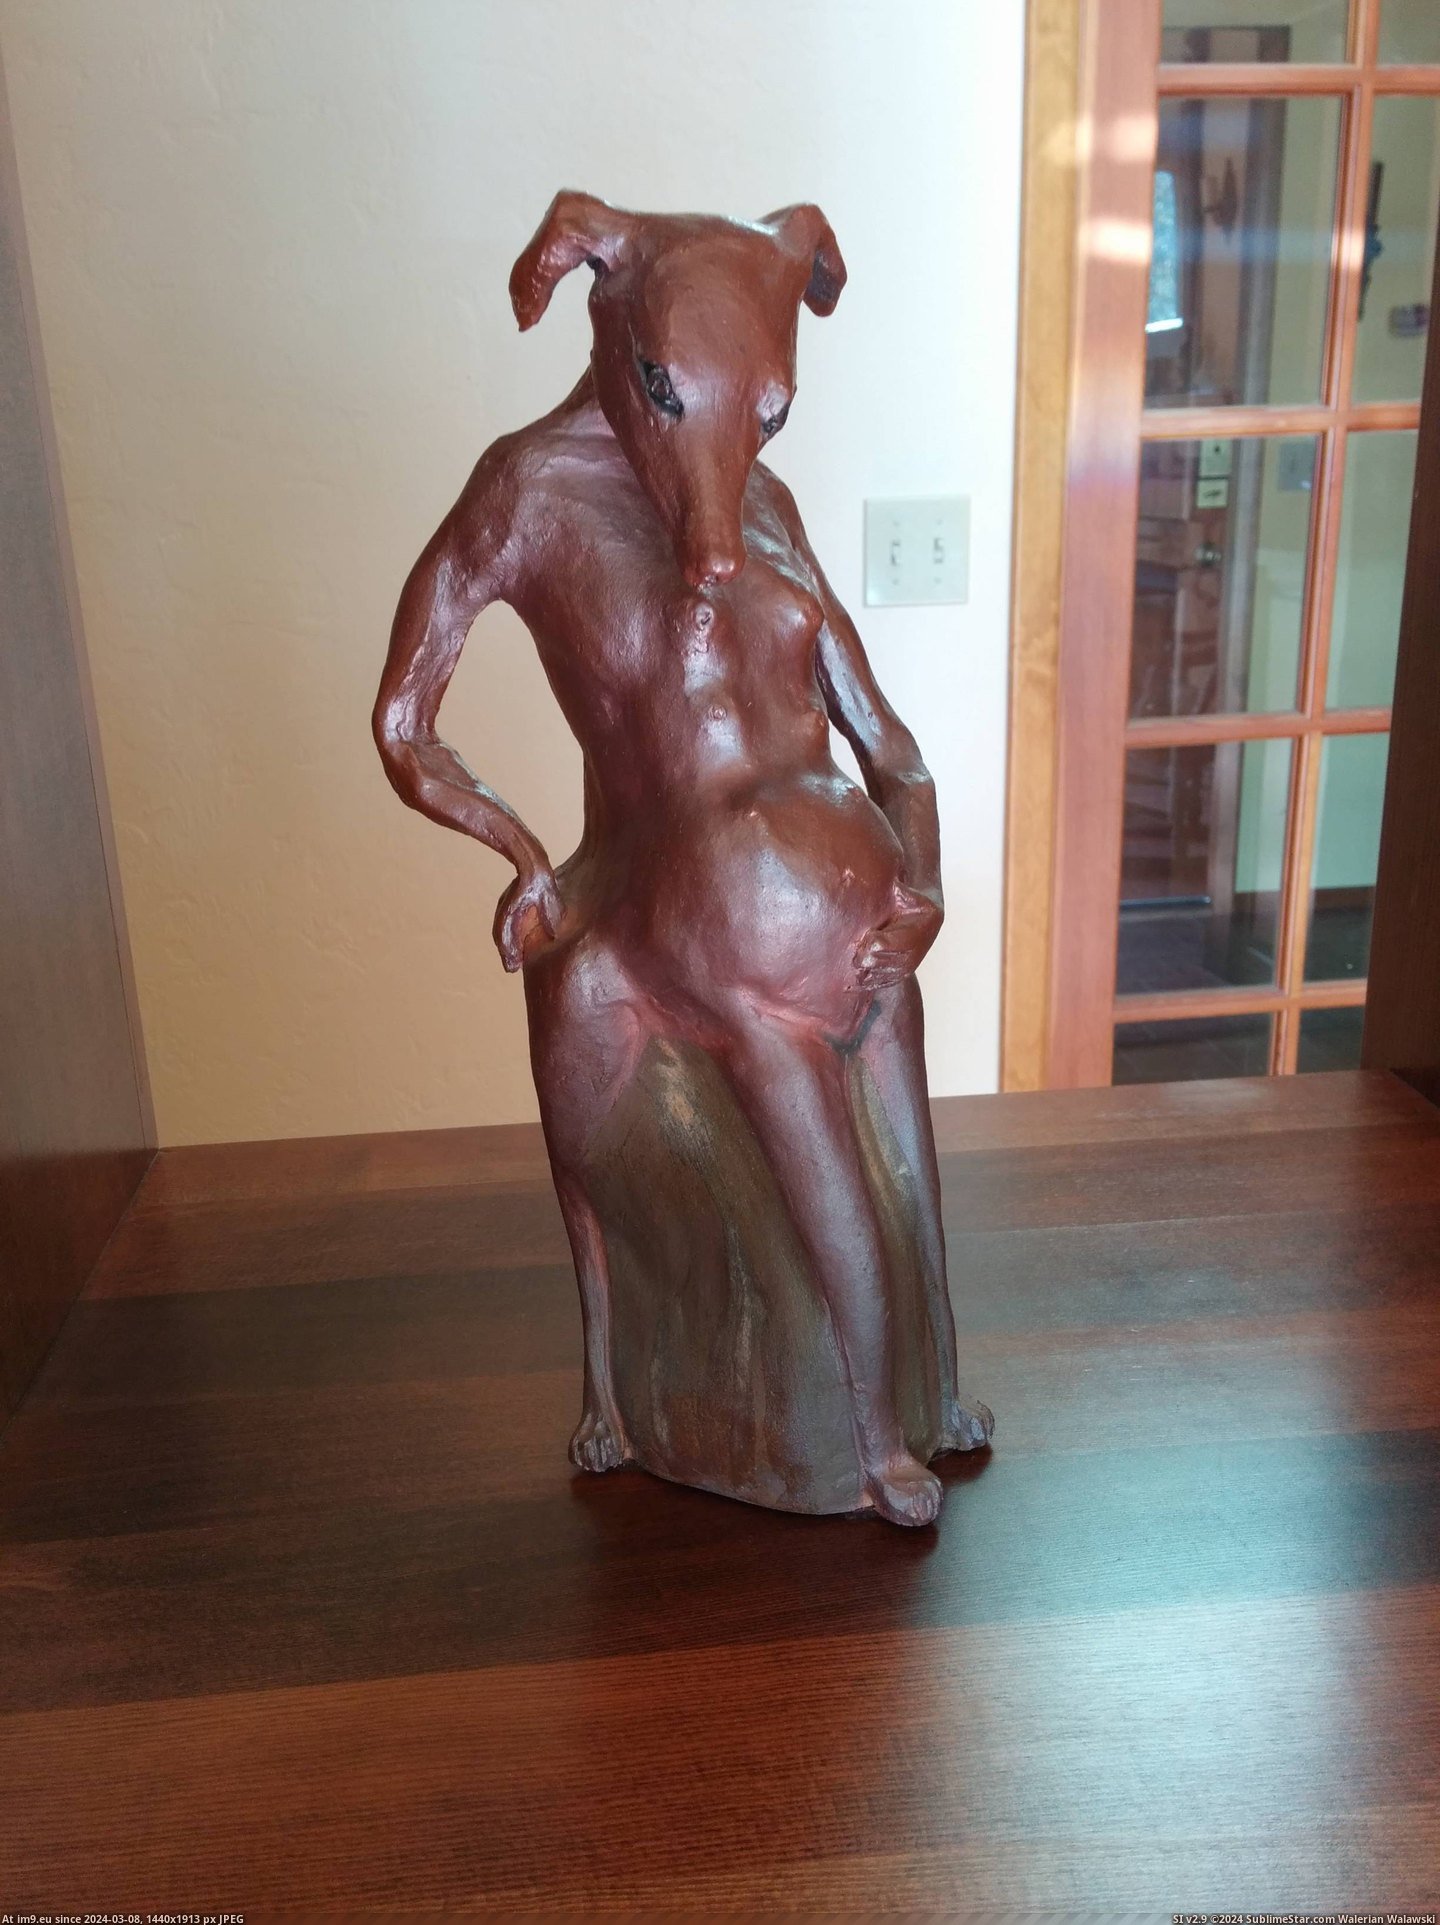 #Wtf #Statue #Creepy [Wtf] Creepy statue Pic. (Image of album My r/WTF favs))